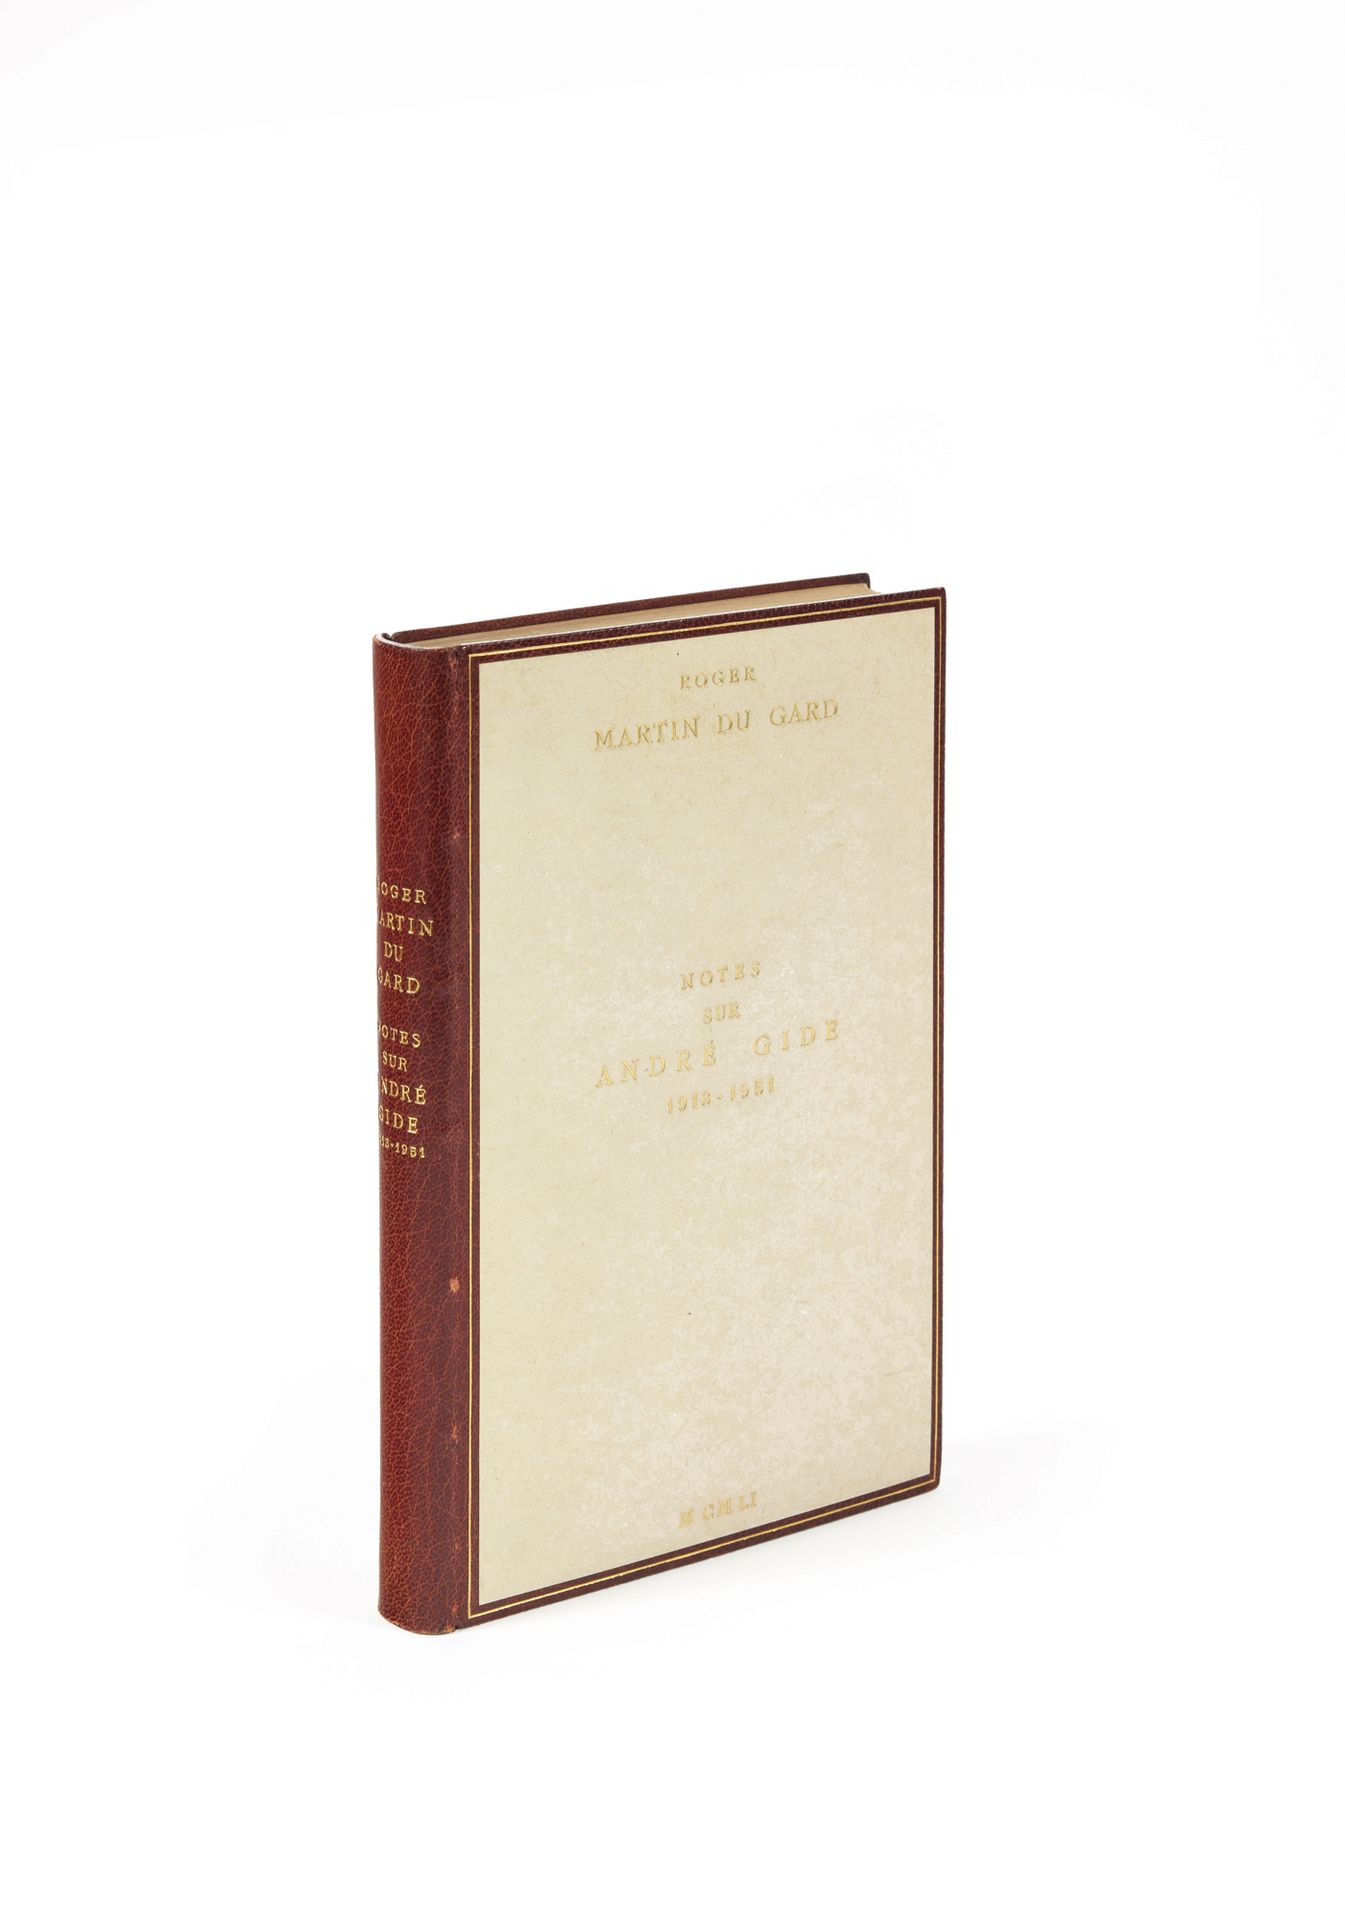 Martin du Gard, Roger 关于安德烈-纪德1913-1951年的笔记。巴黎，Gallimard出版社，1951年；8开本(184 x 117 &hellip;